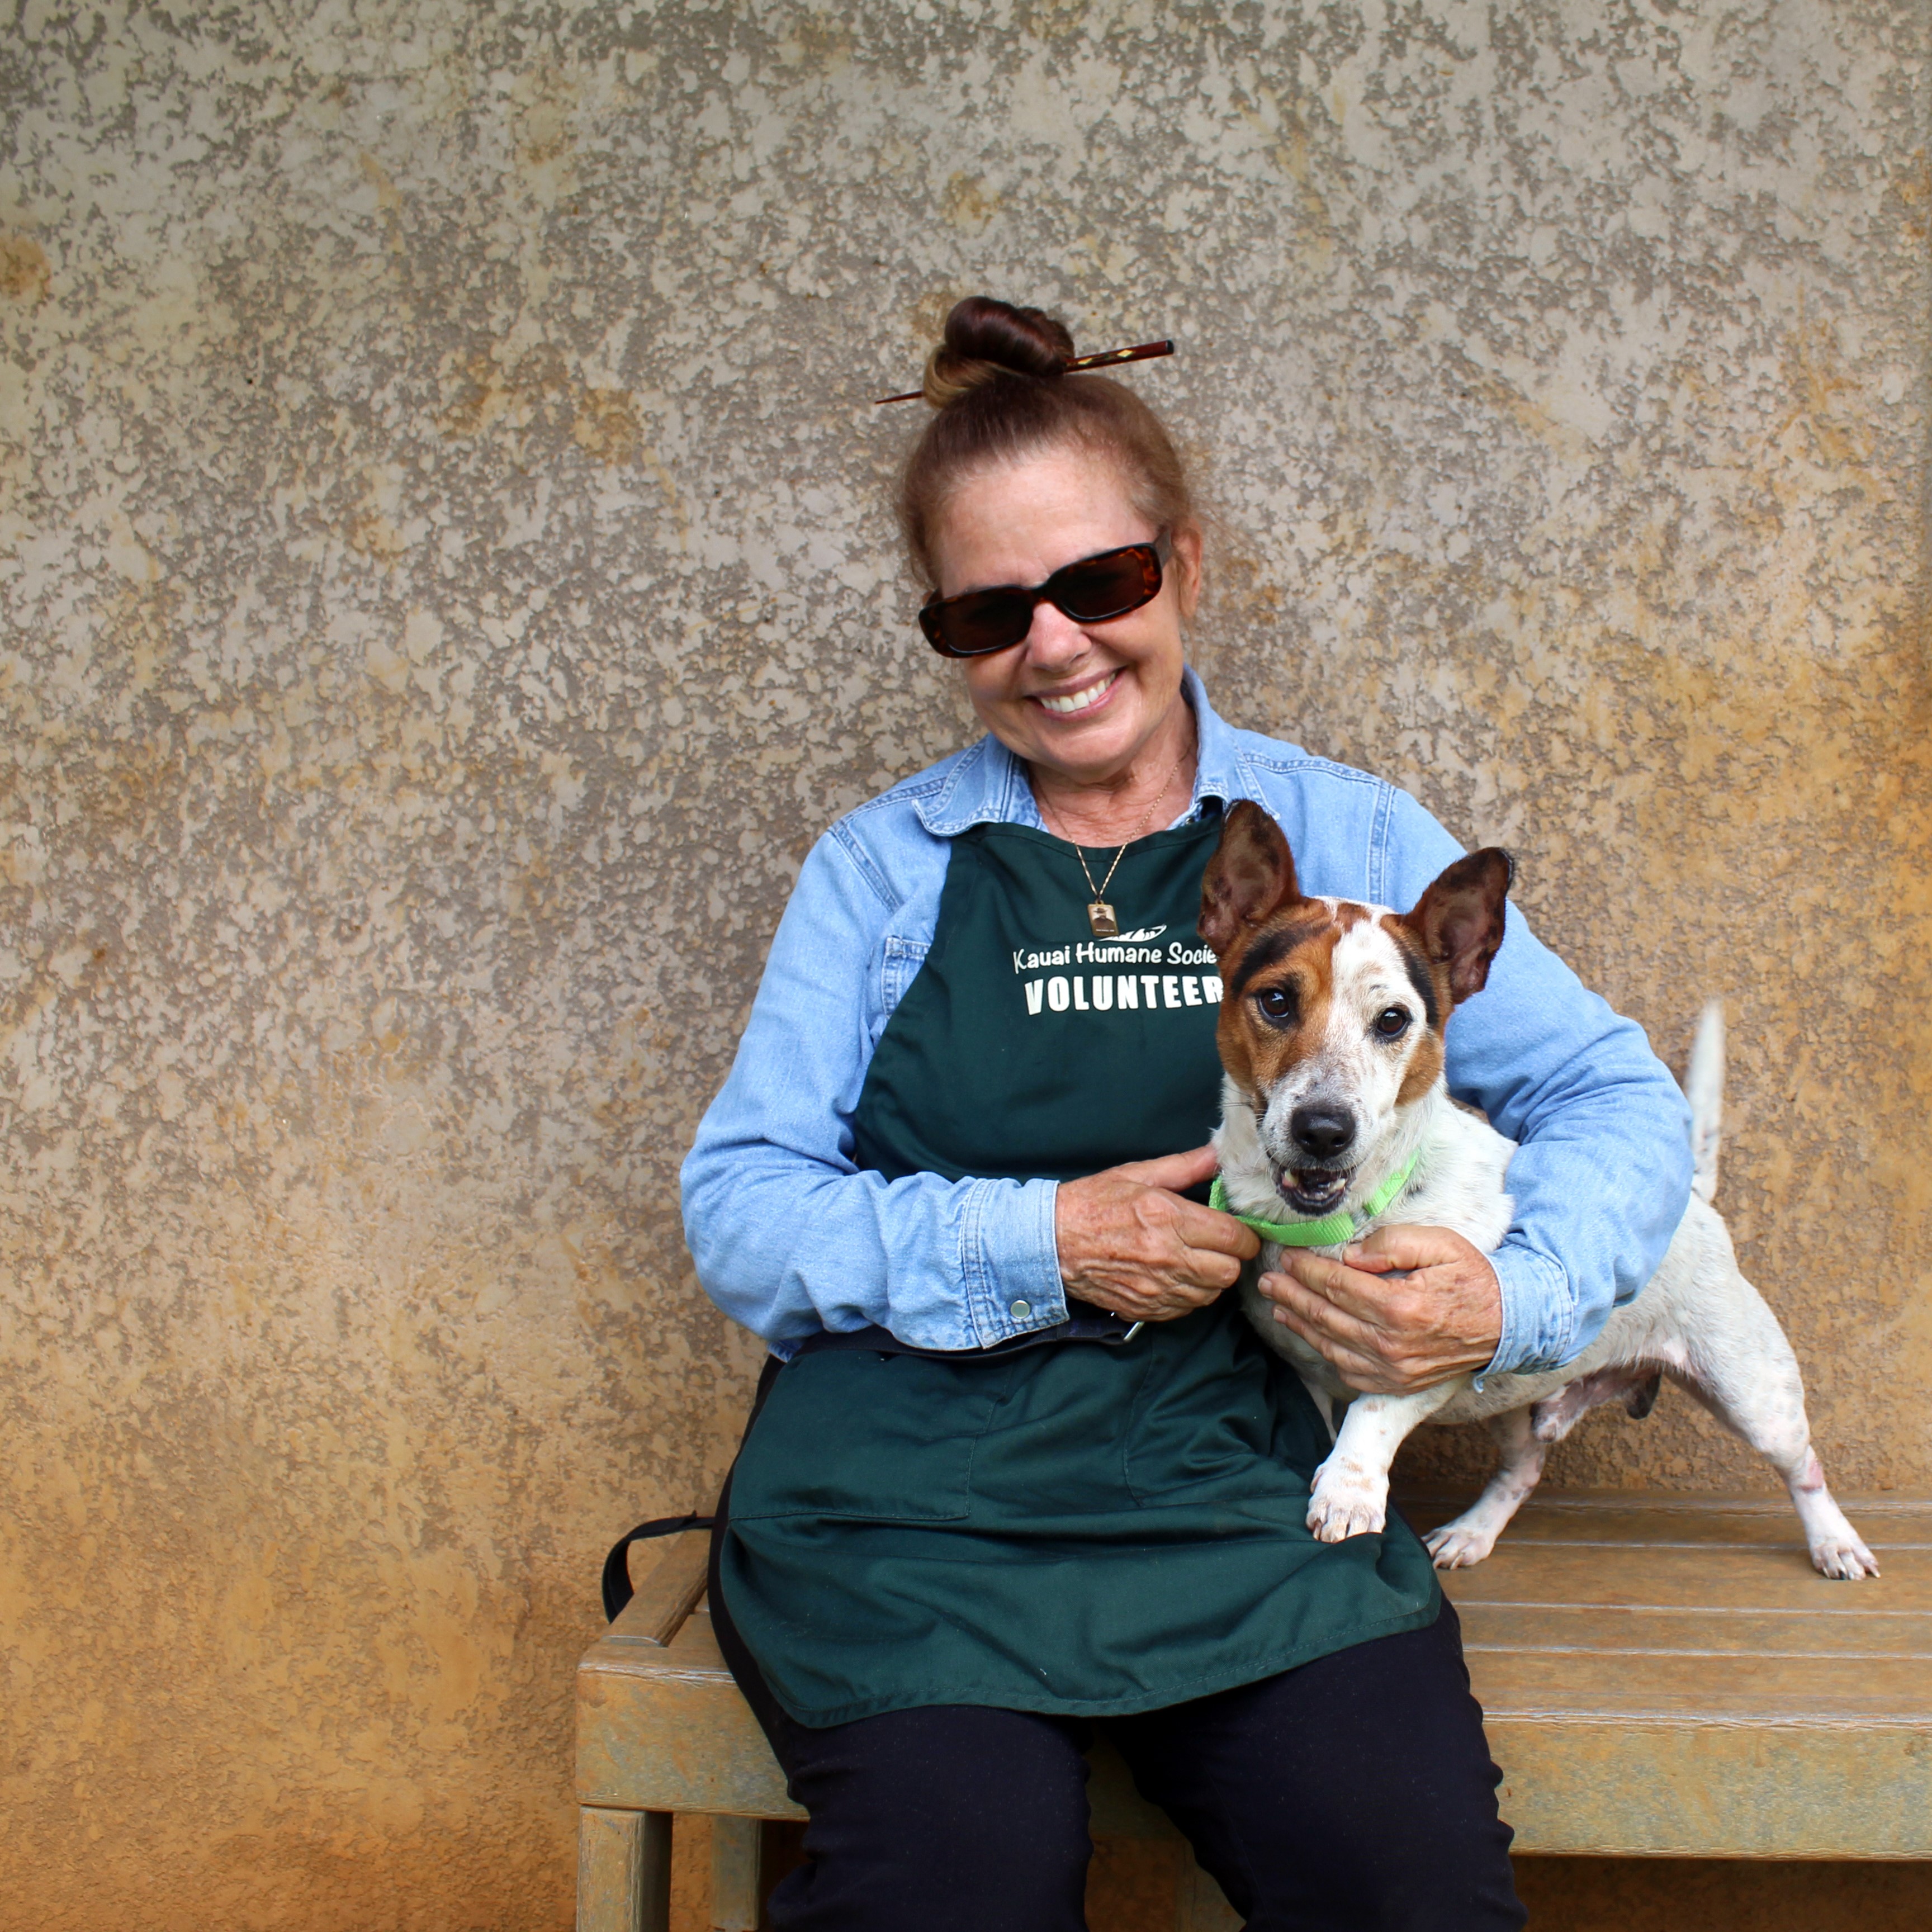 Celia is the Kauai Humane Society's volunteer of the month.